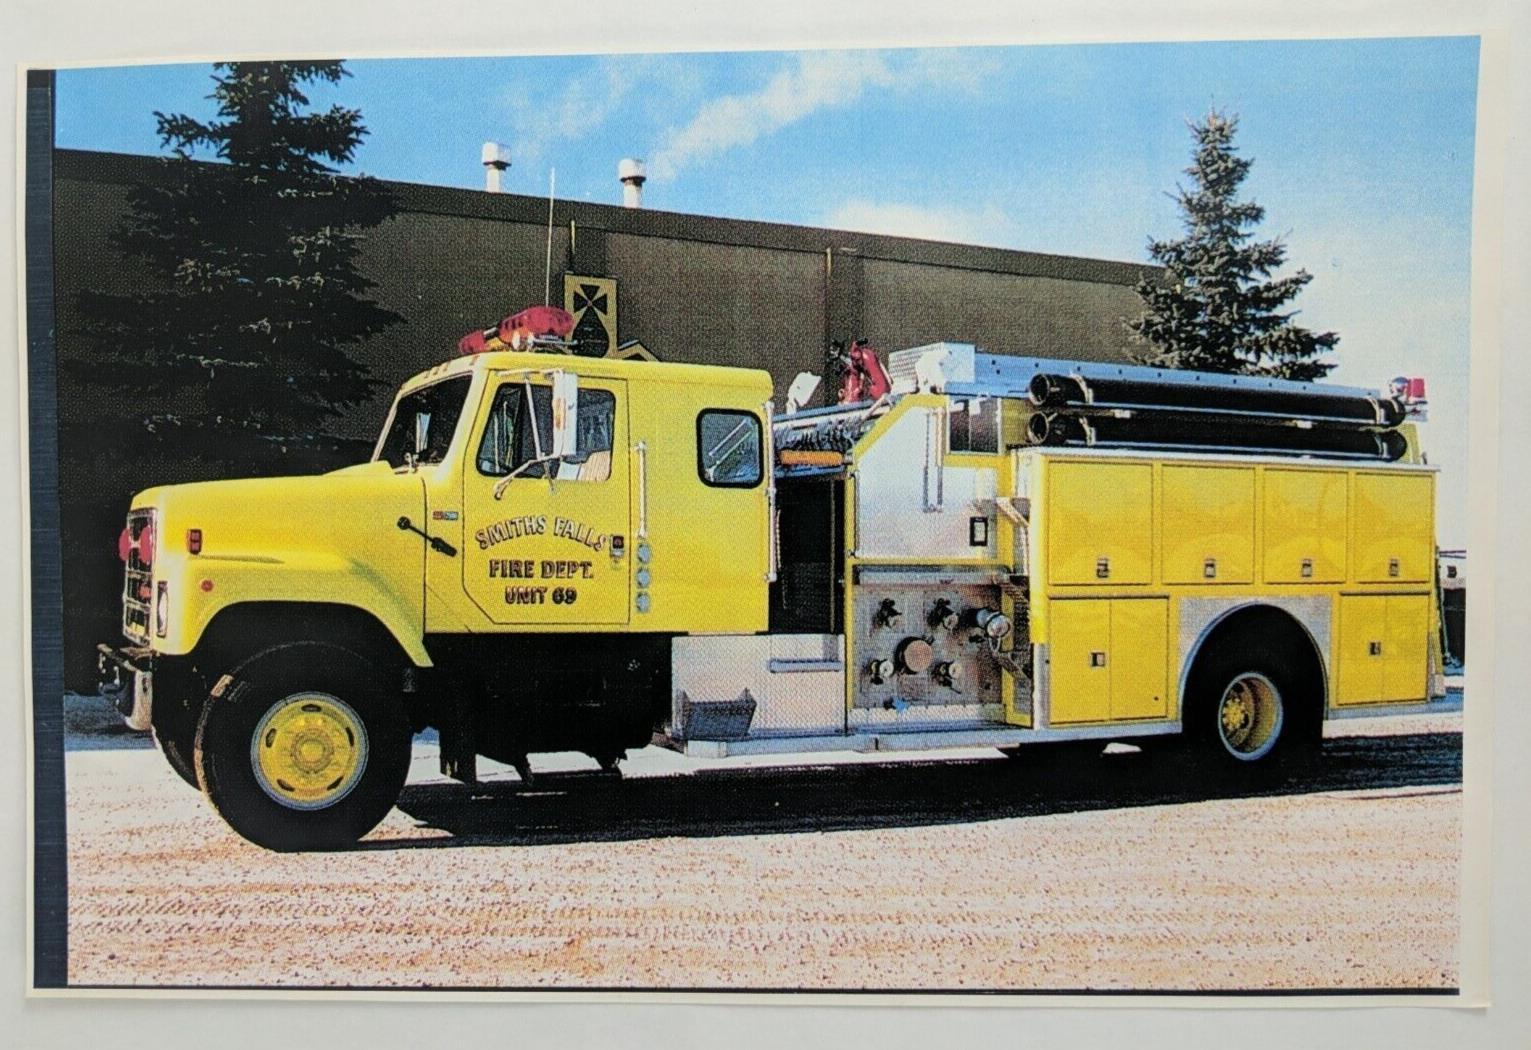 Vintage Firetruck Photo Print, Large 17x11 Smiths Falls Fire Dept Unit 69 Yellow